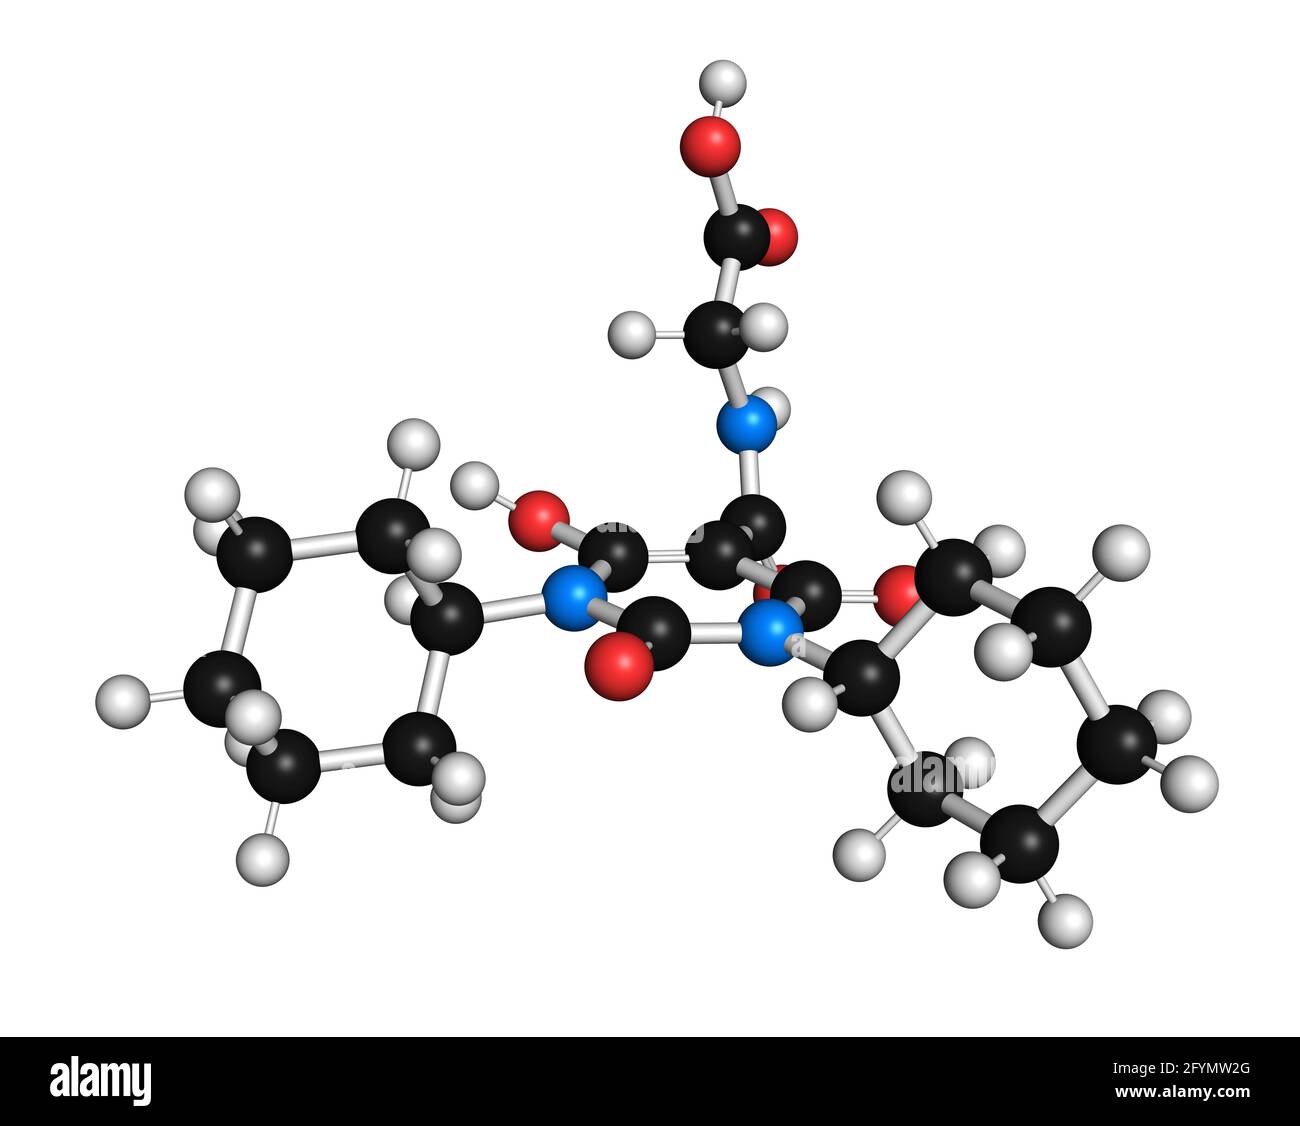 Daprodustat drug molecule, illustration Stock Photo